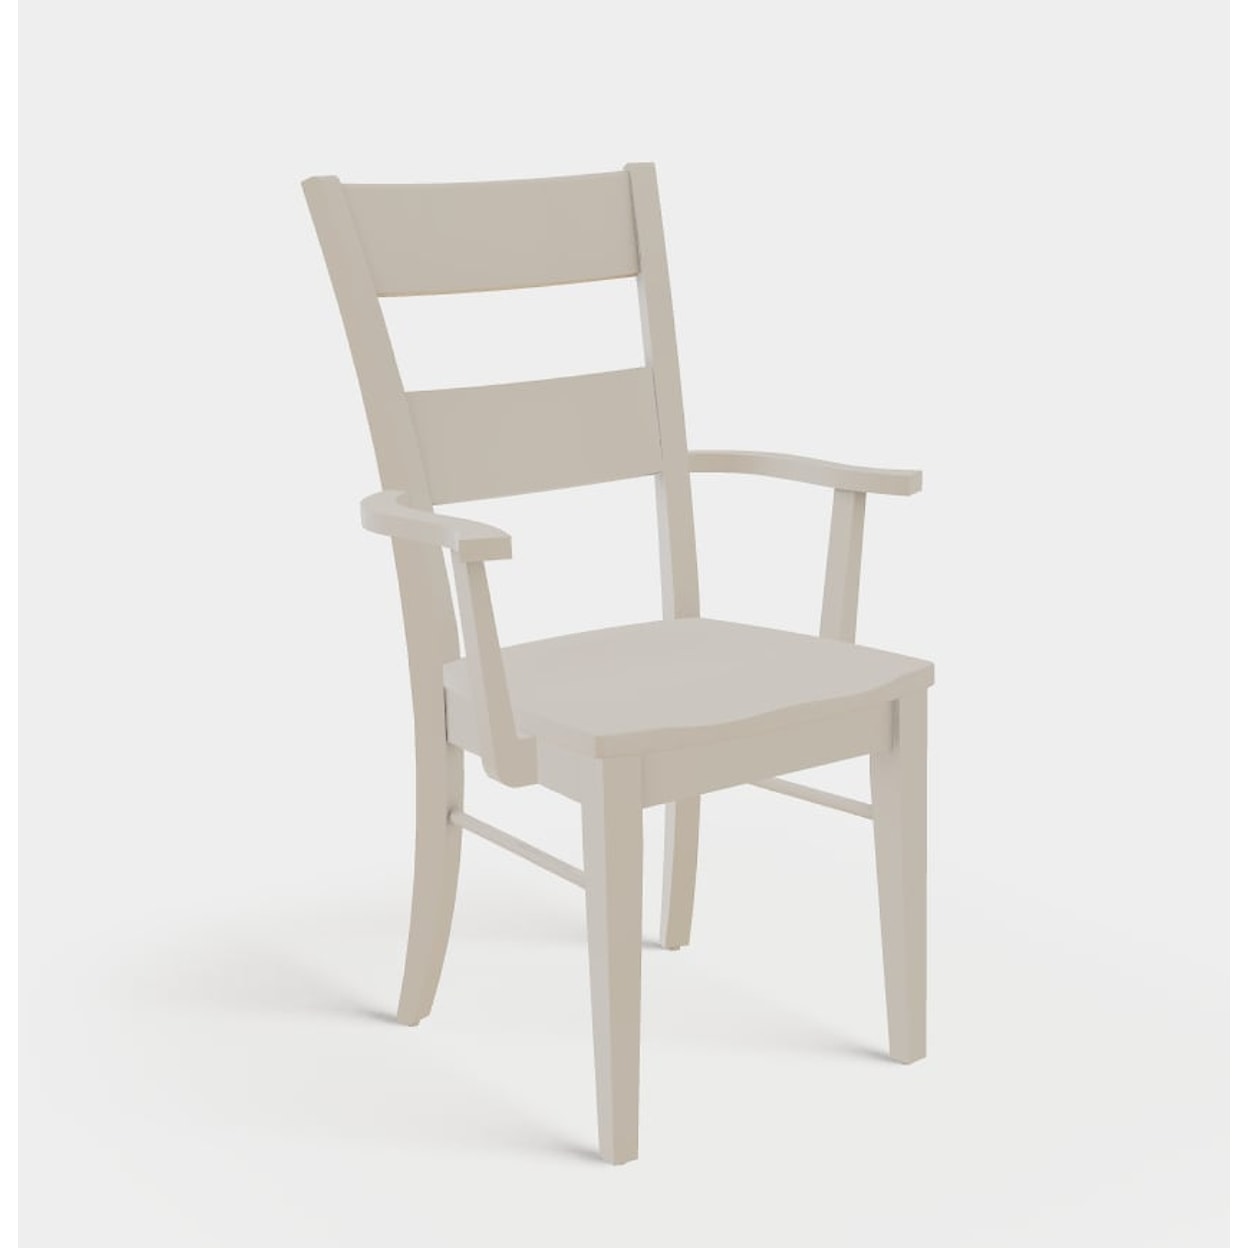 Mavin Aspen Aspen Customizable Chair